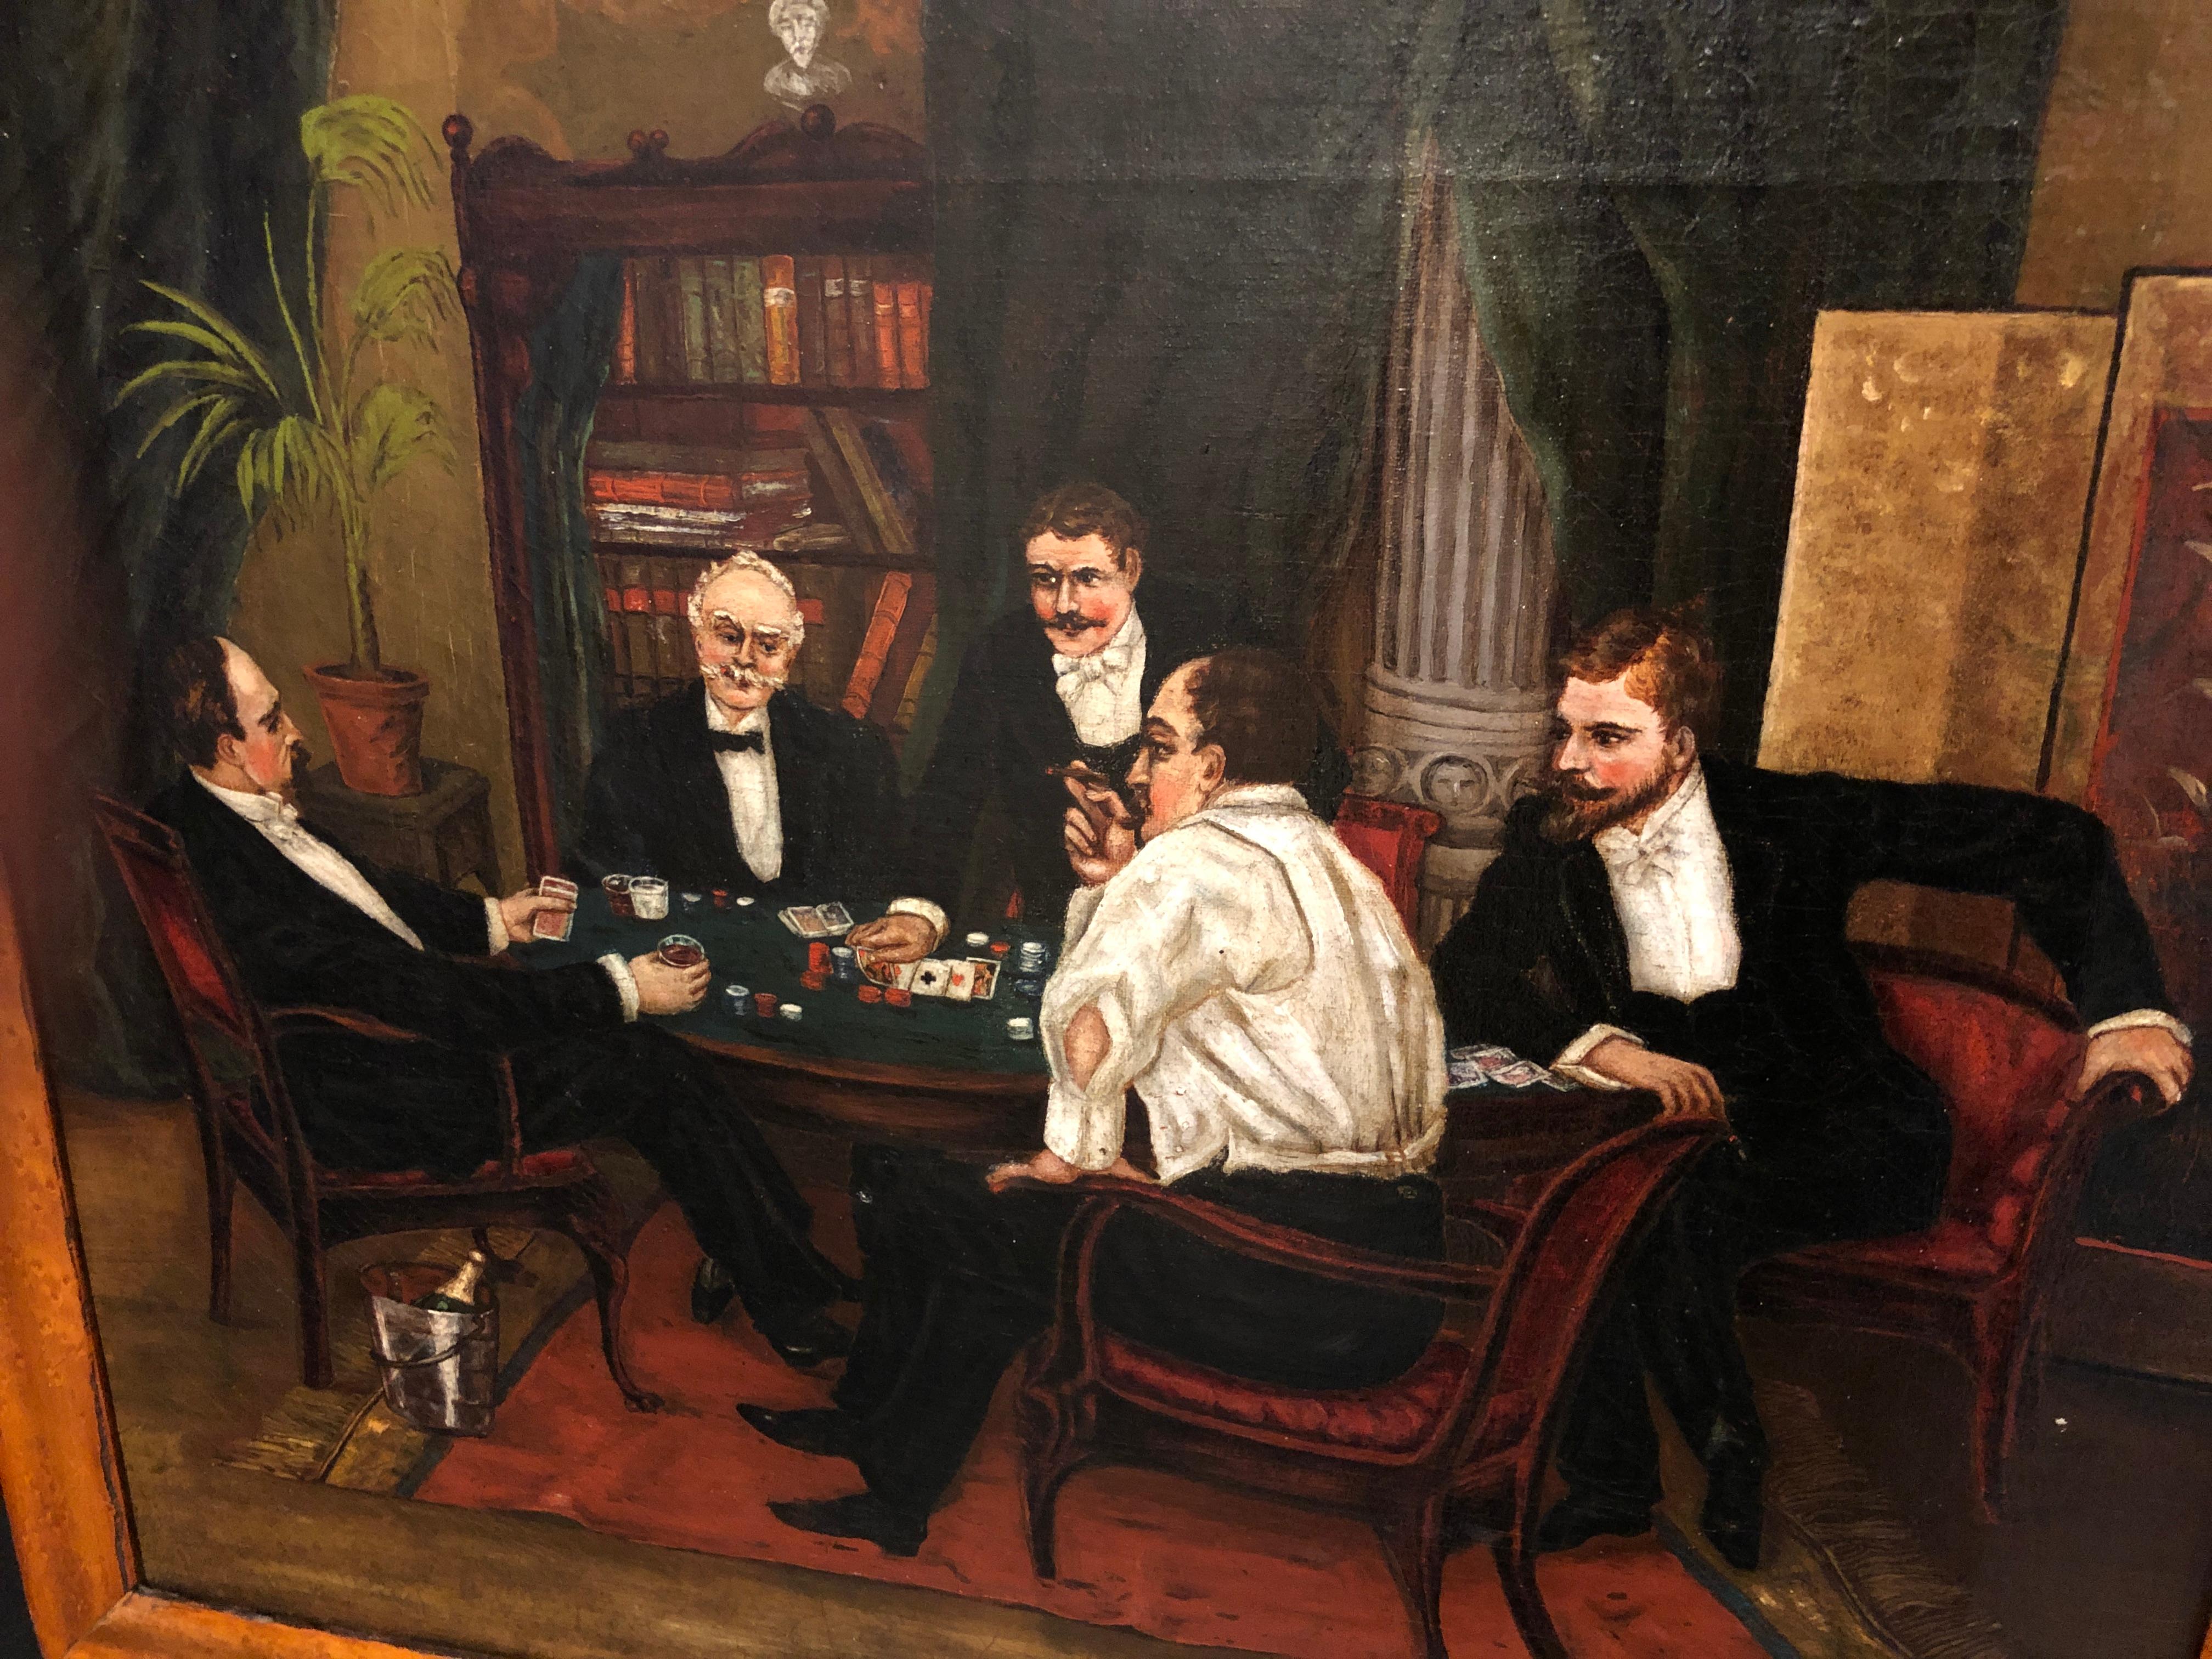 Hand-Painted 19th Century Painting of Men Gambling